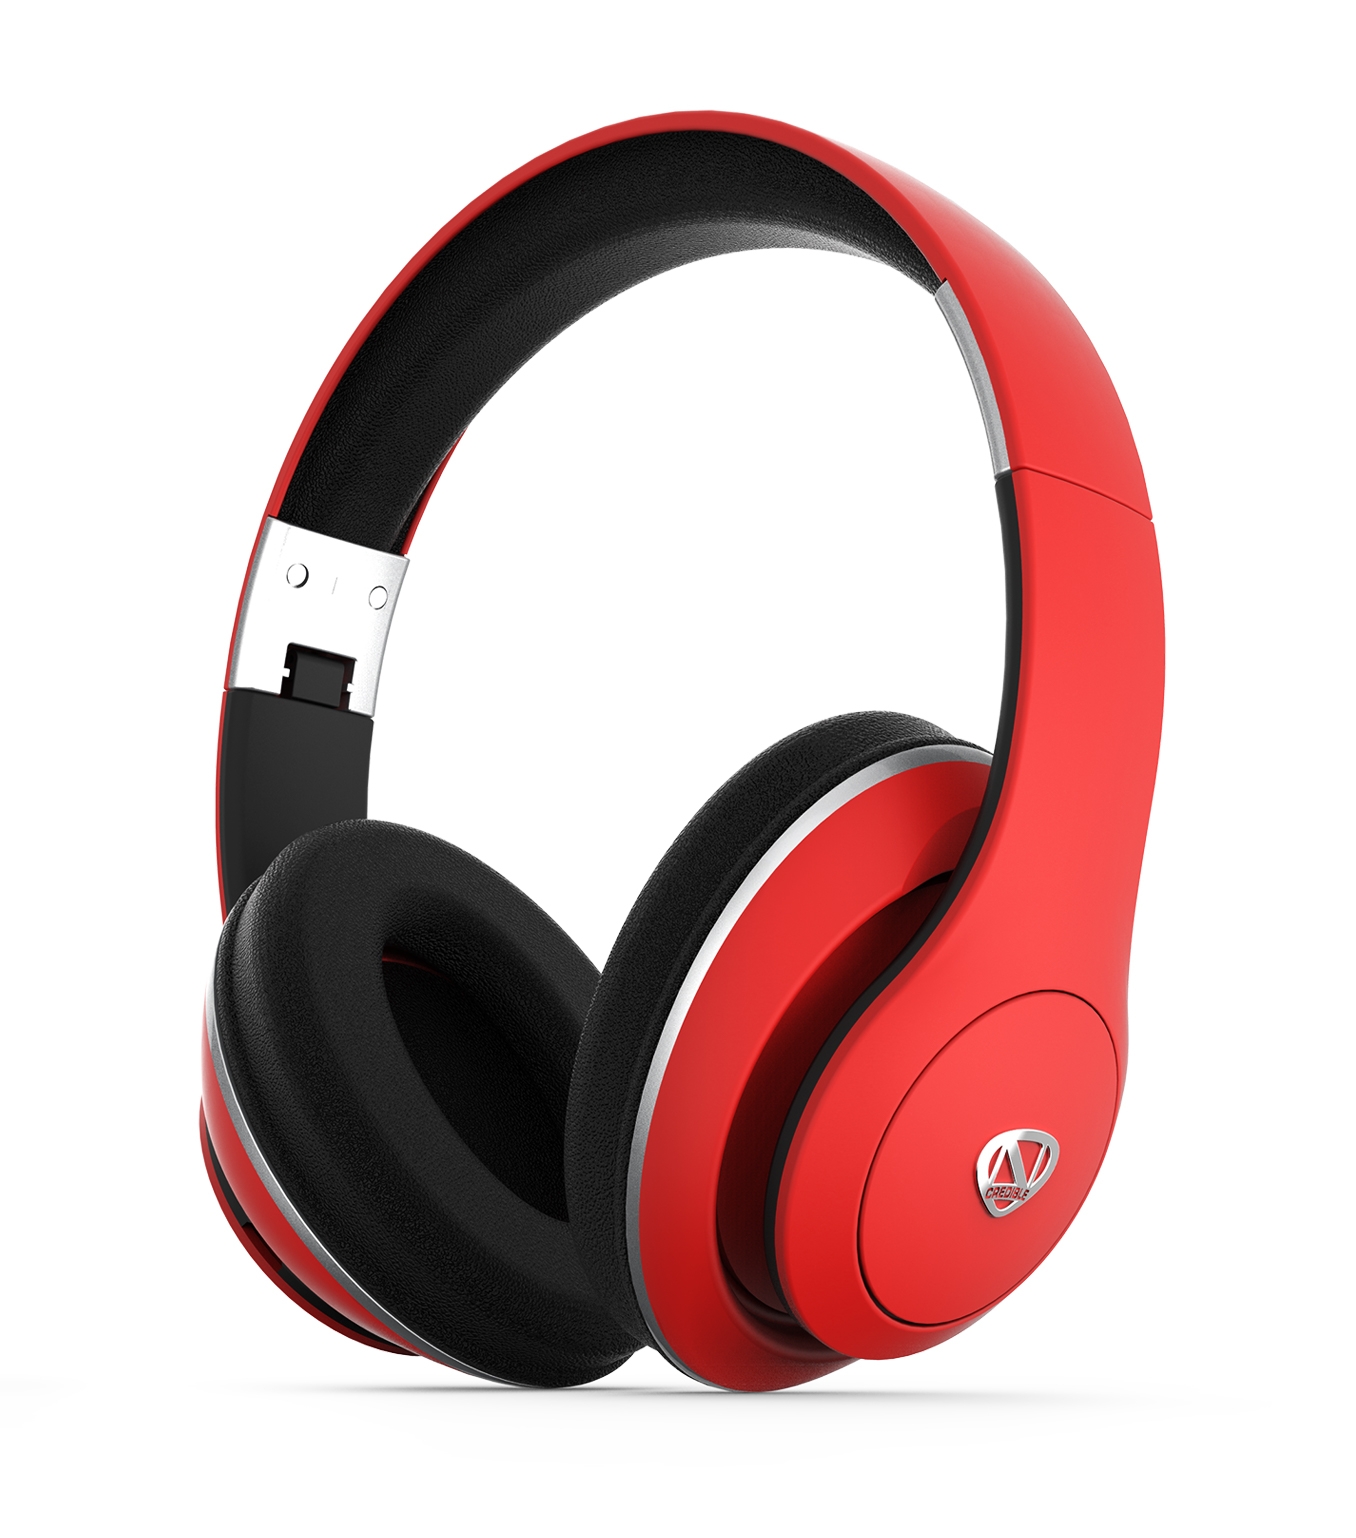 NCredible1 Red wireless headphones